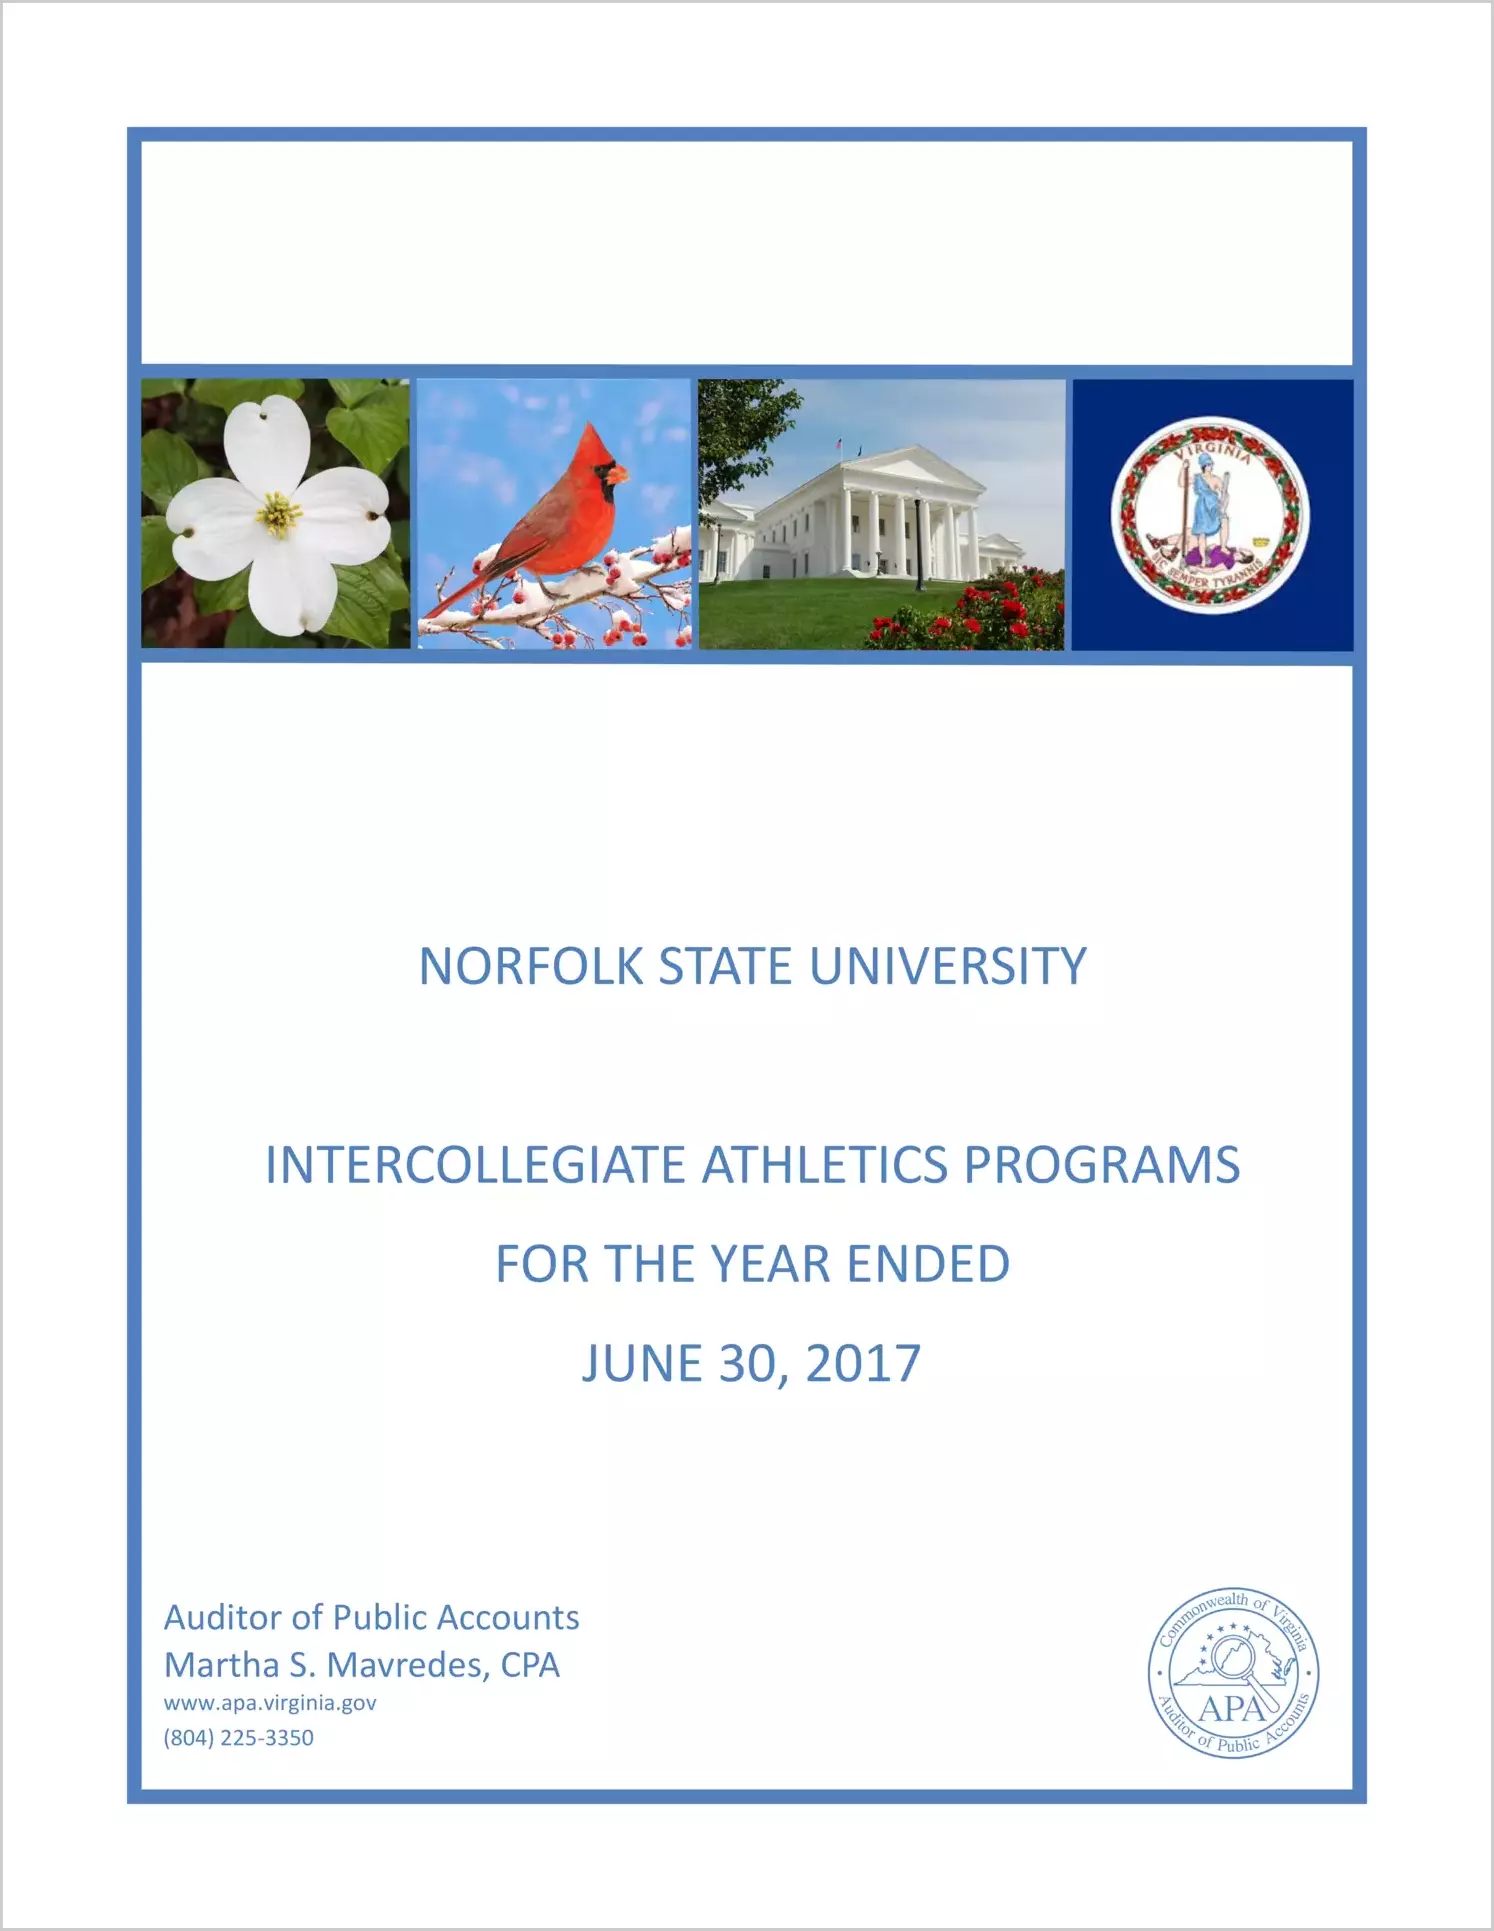 Norfolk State University Intercollegiate Athletics Programs for the year ended June 30, 2017